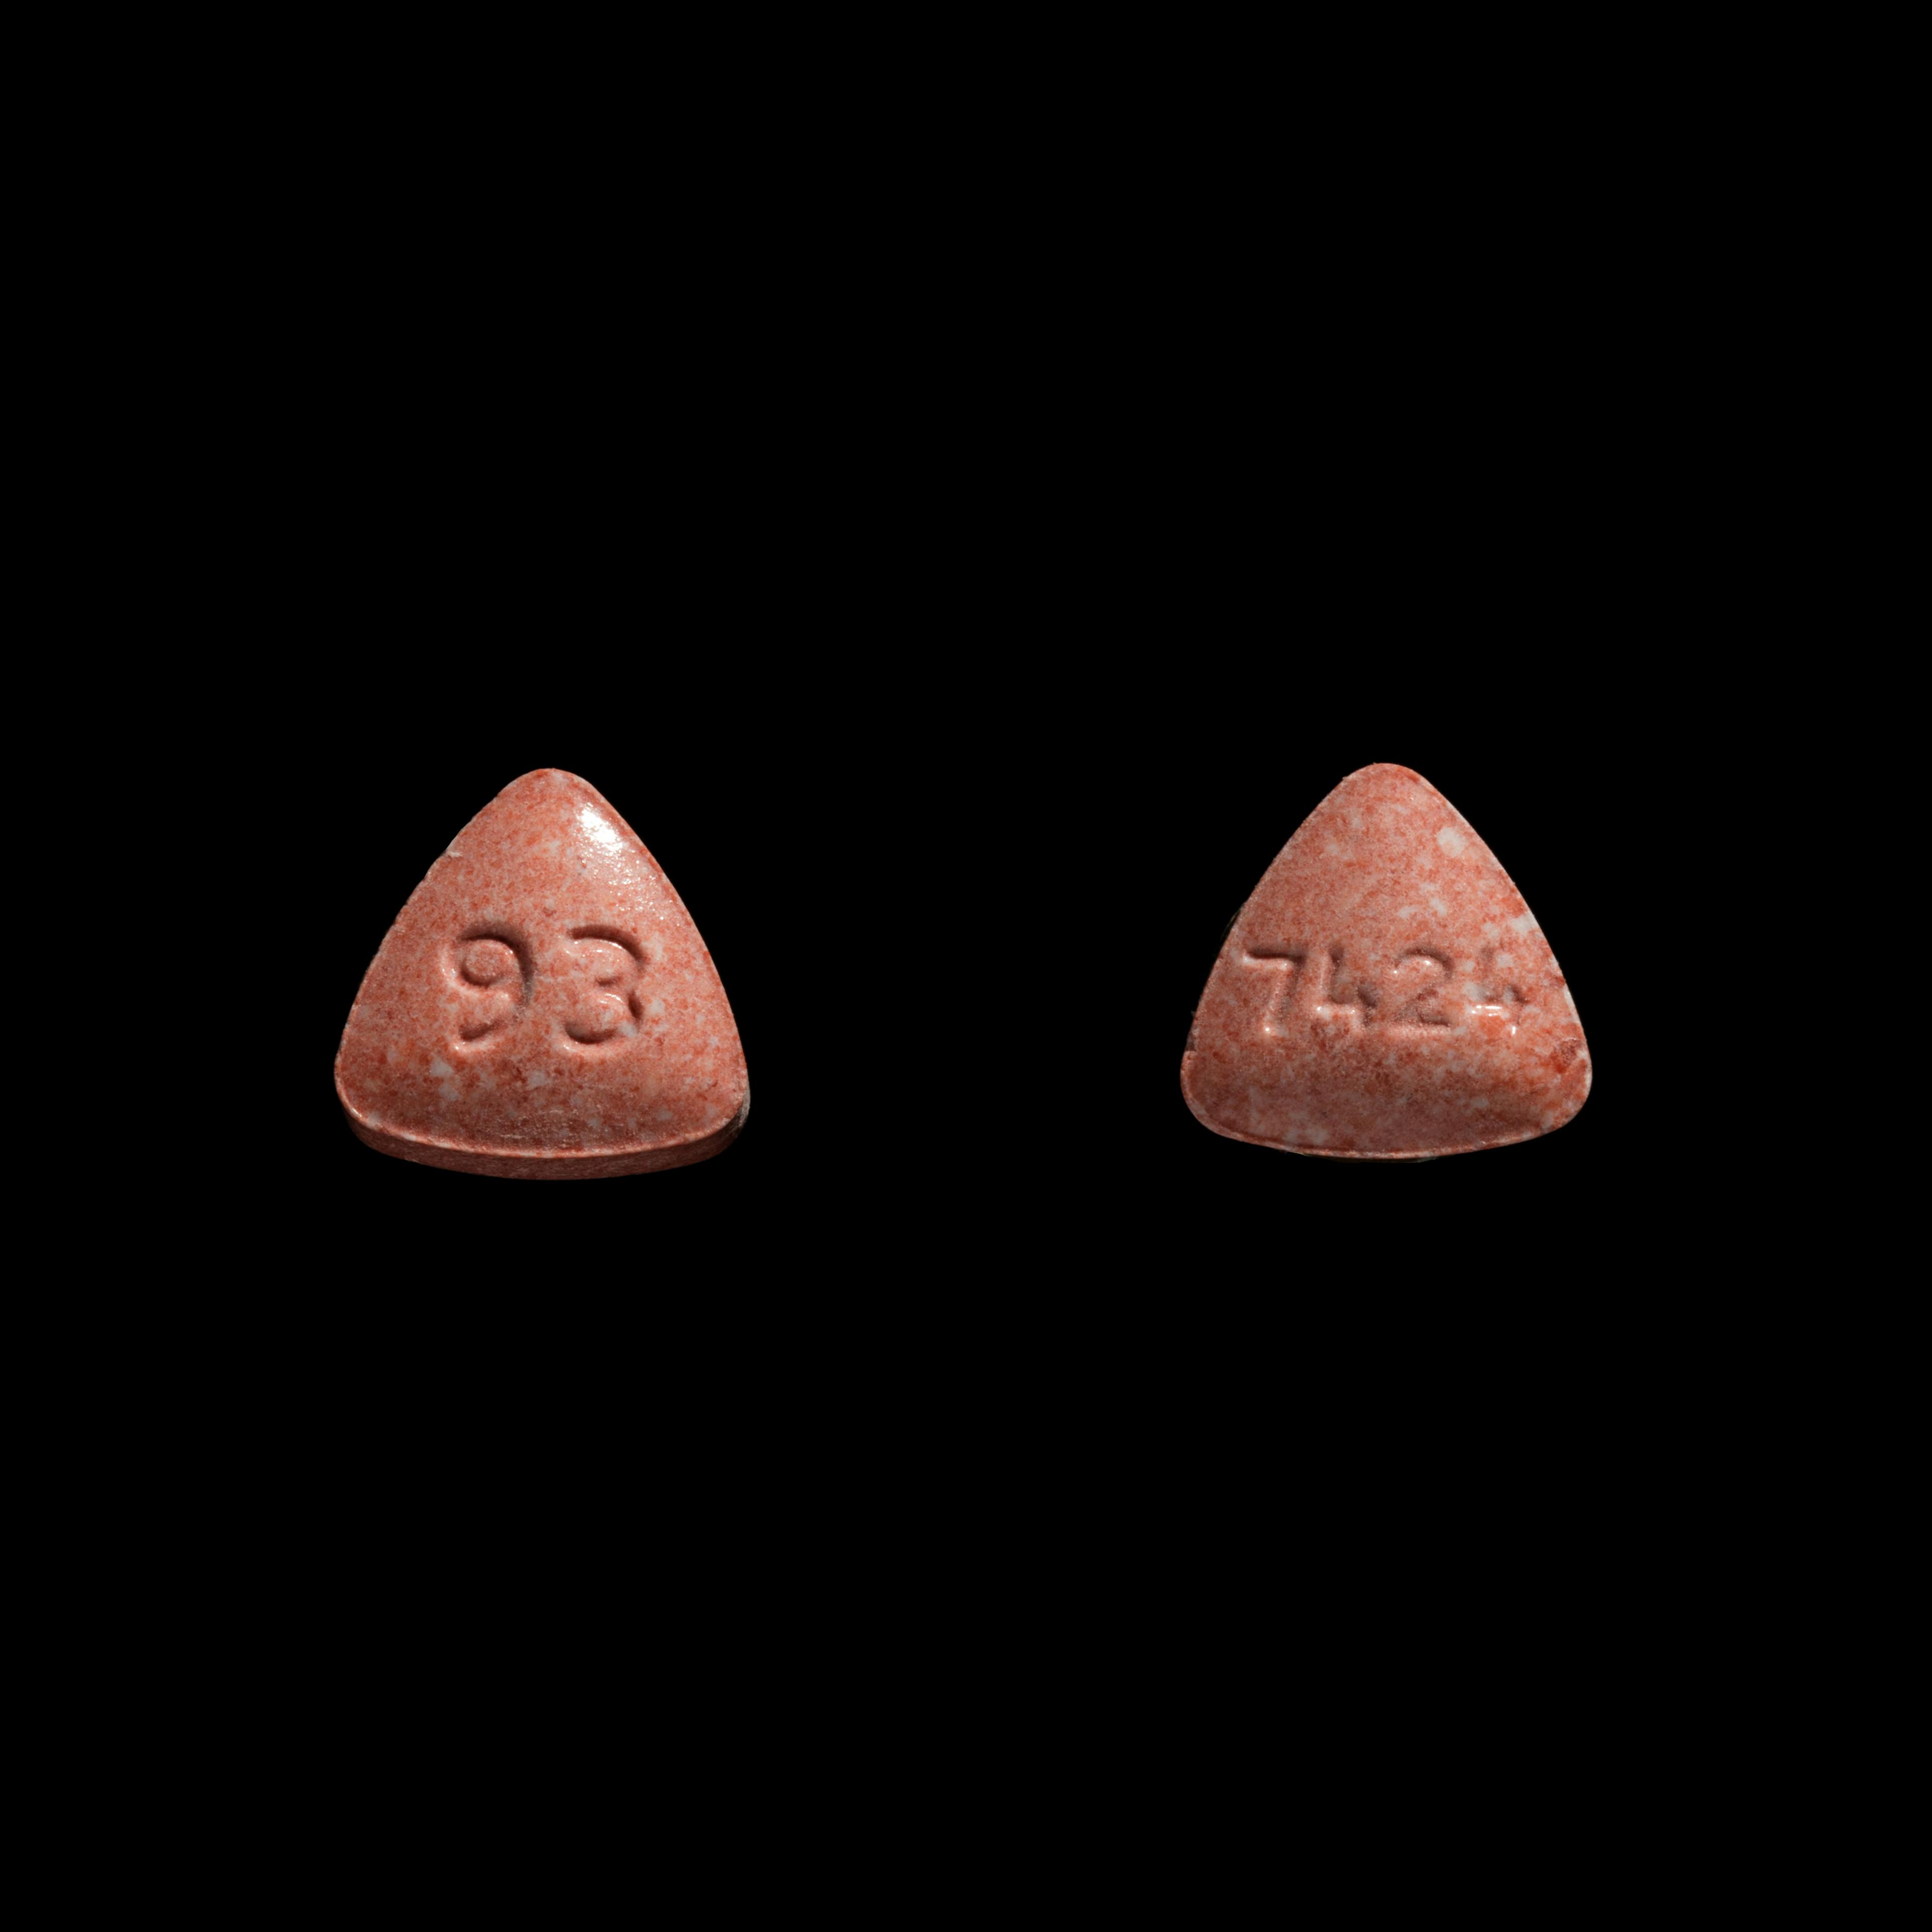 Montelukast ratiopharm 4 mg tuggutöflur